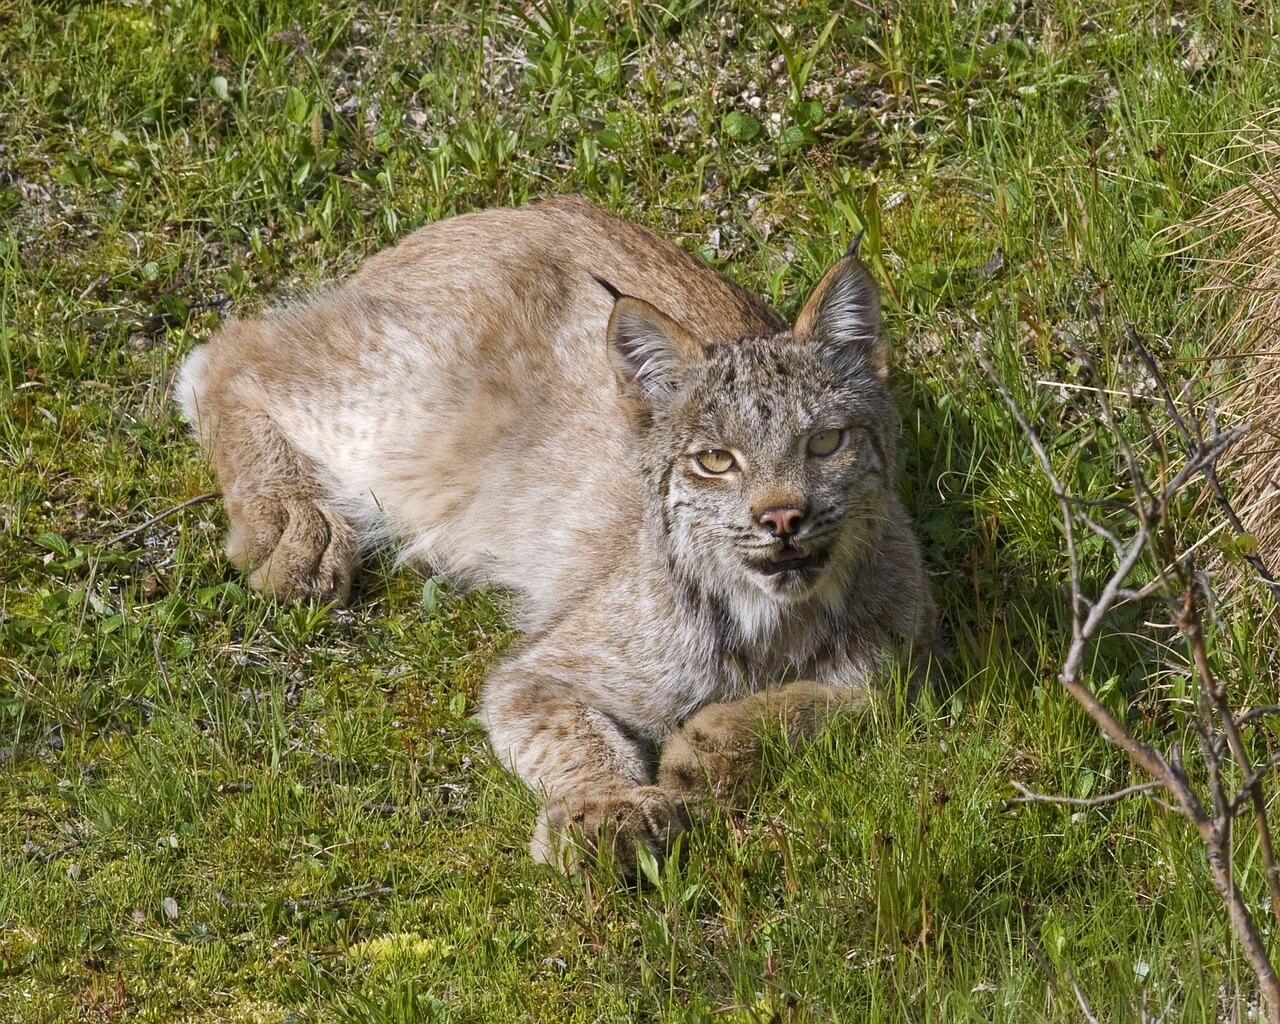 https://pixabay.com/en/lynx-bobcat-predator-looking-3744765/